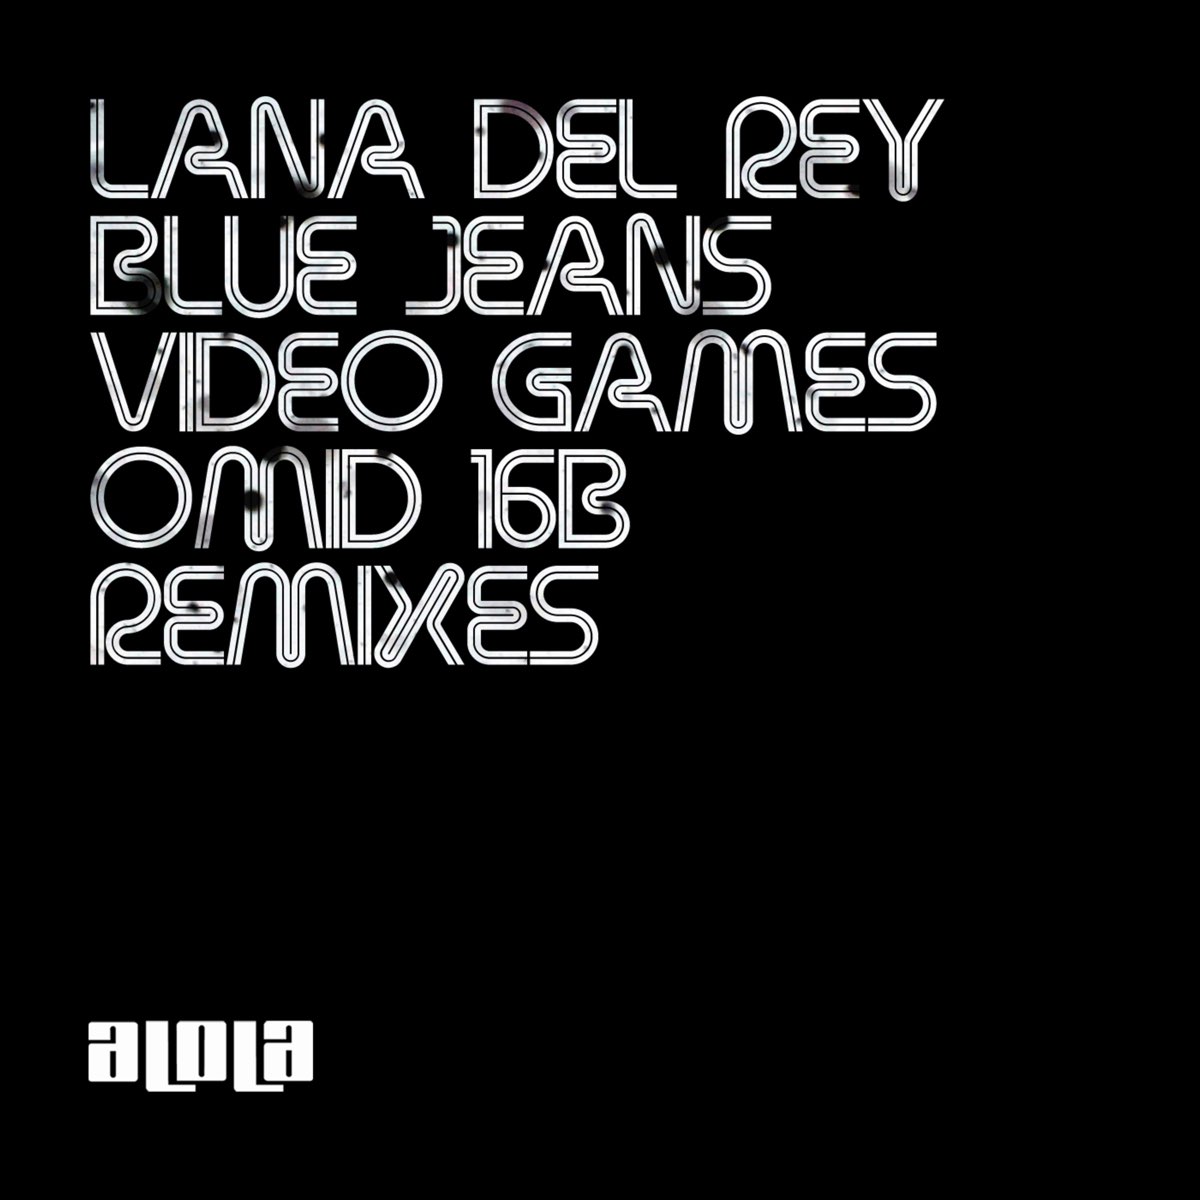 Blue Jeans / Video Games (Omid 16b Remixes) - EP - Album by Lana Del Rey -  Apple Music